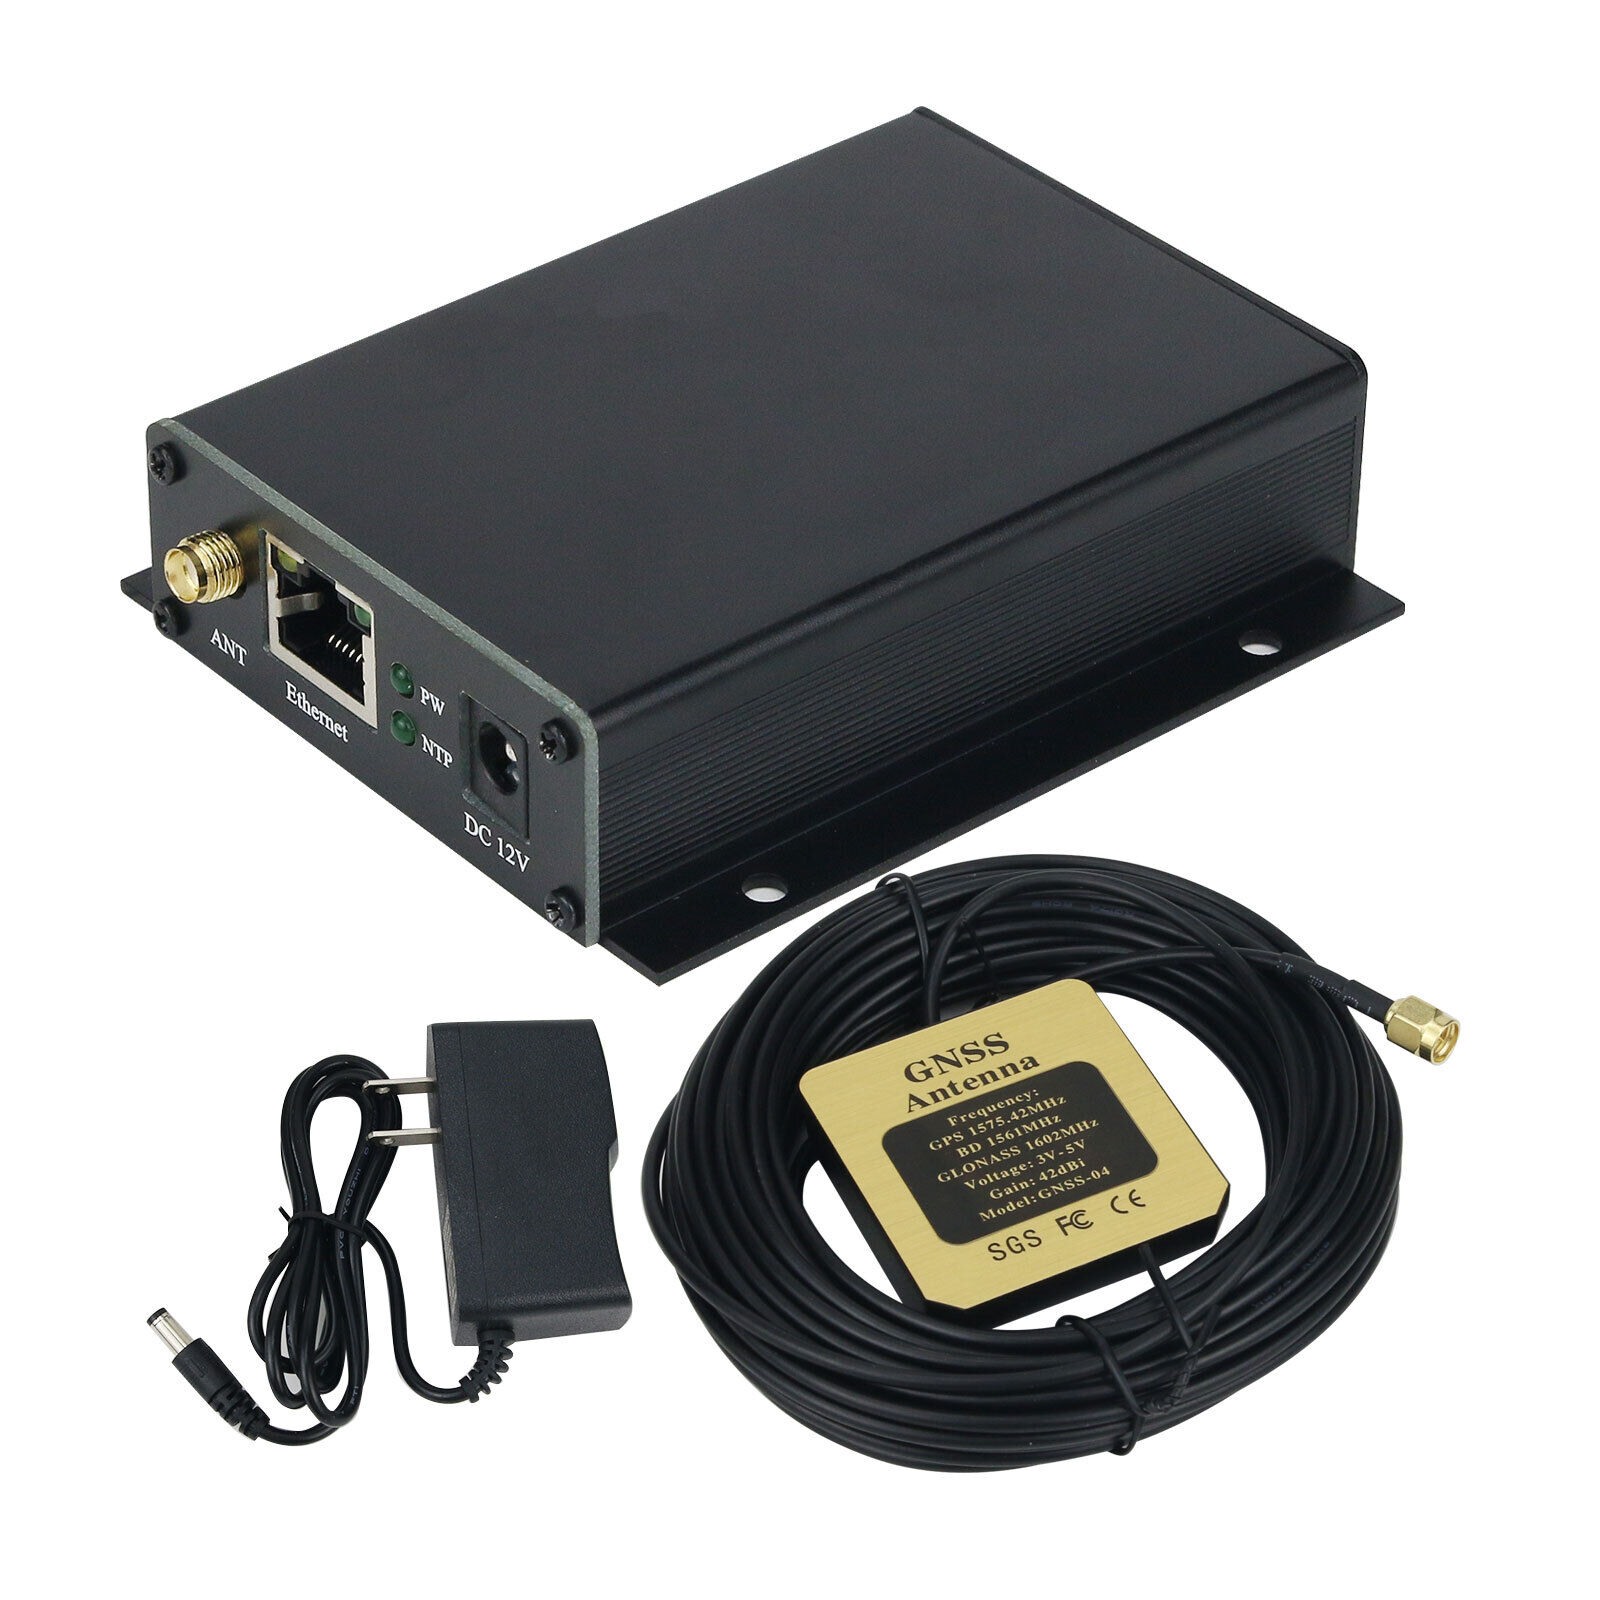 FC-NTP-MINI NTP Server Network Time Server 1-Ethernet Port For GPS Beidou QZSS